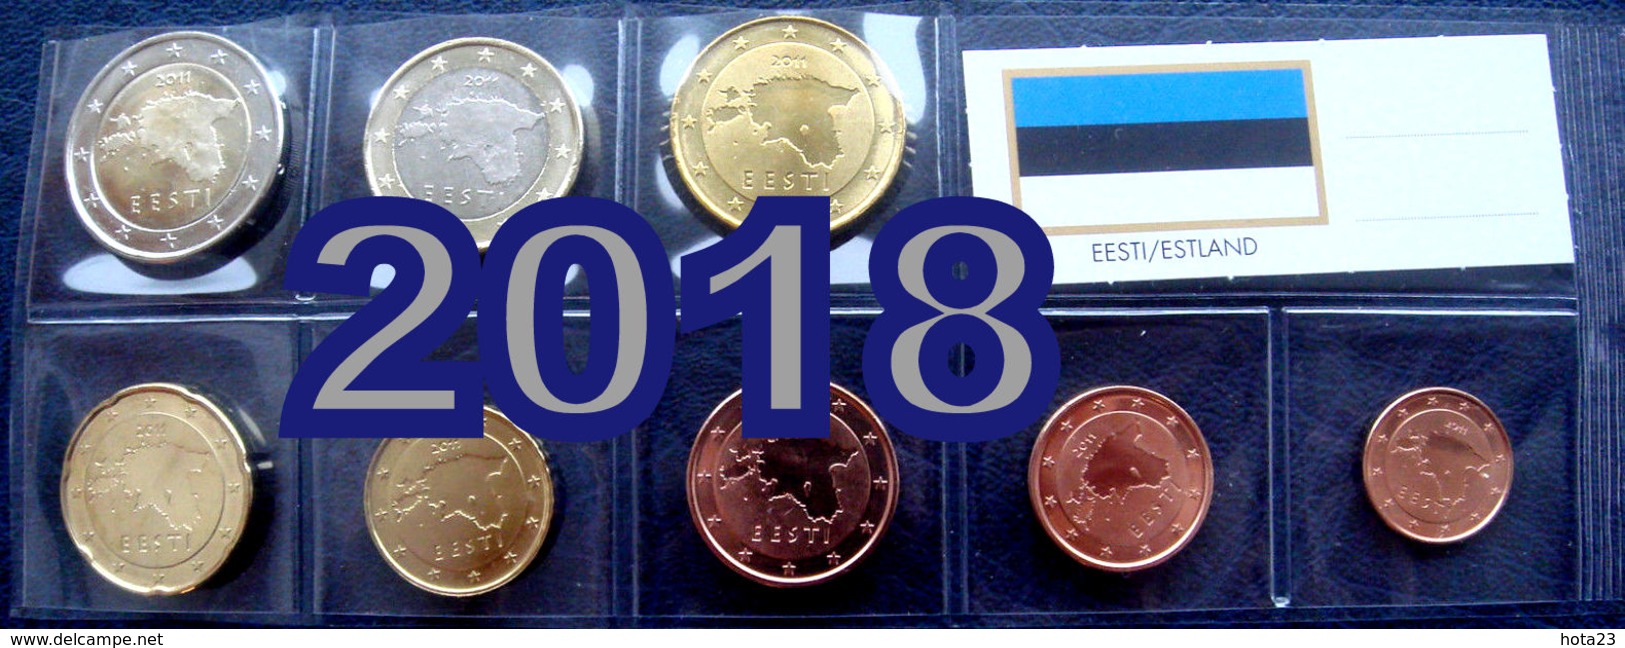 2018 ESTLAND , ESTONIA Münzen 1 Cent - 2 Euro 3,88 Eiro 2018 COINS UNZ / UNC - Estonie